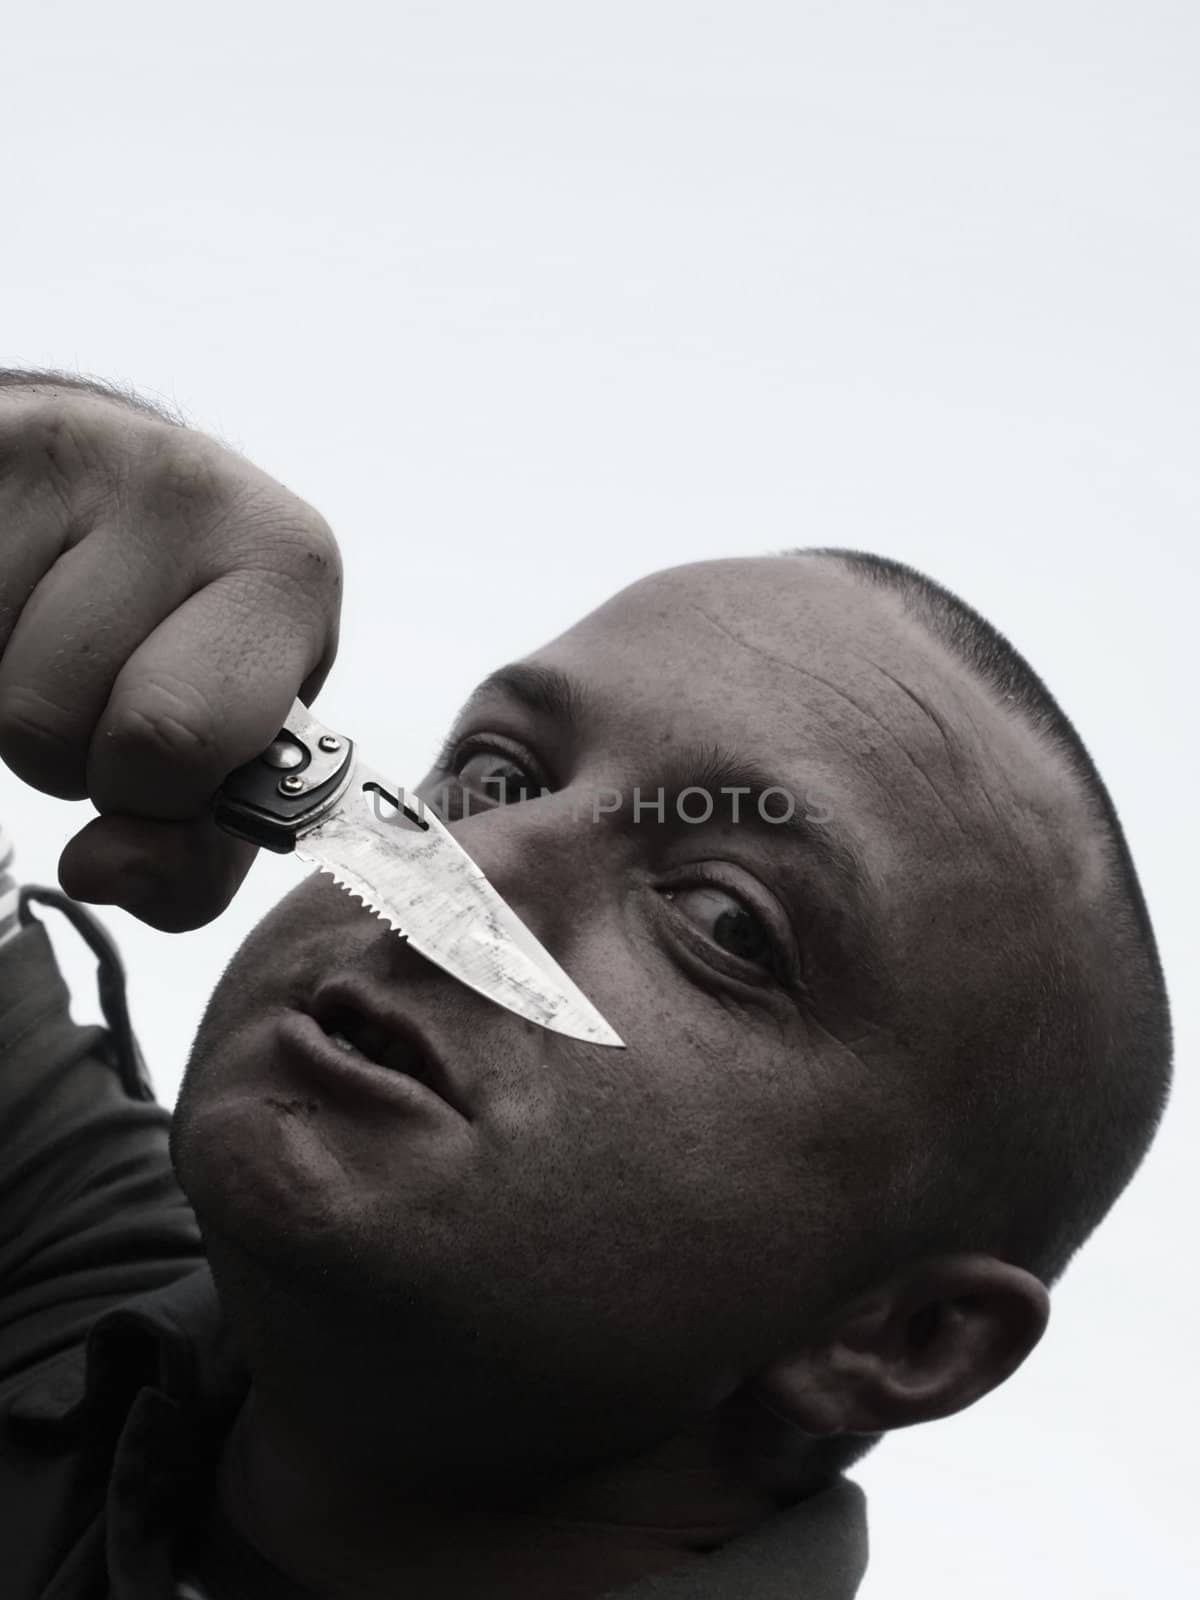 Portrait of a male thug brandishing a pocket knife